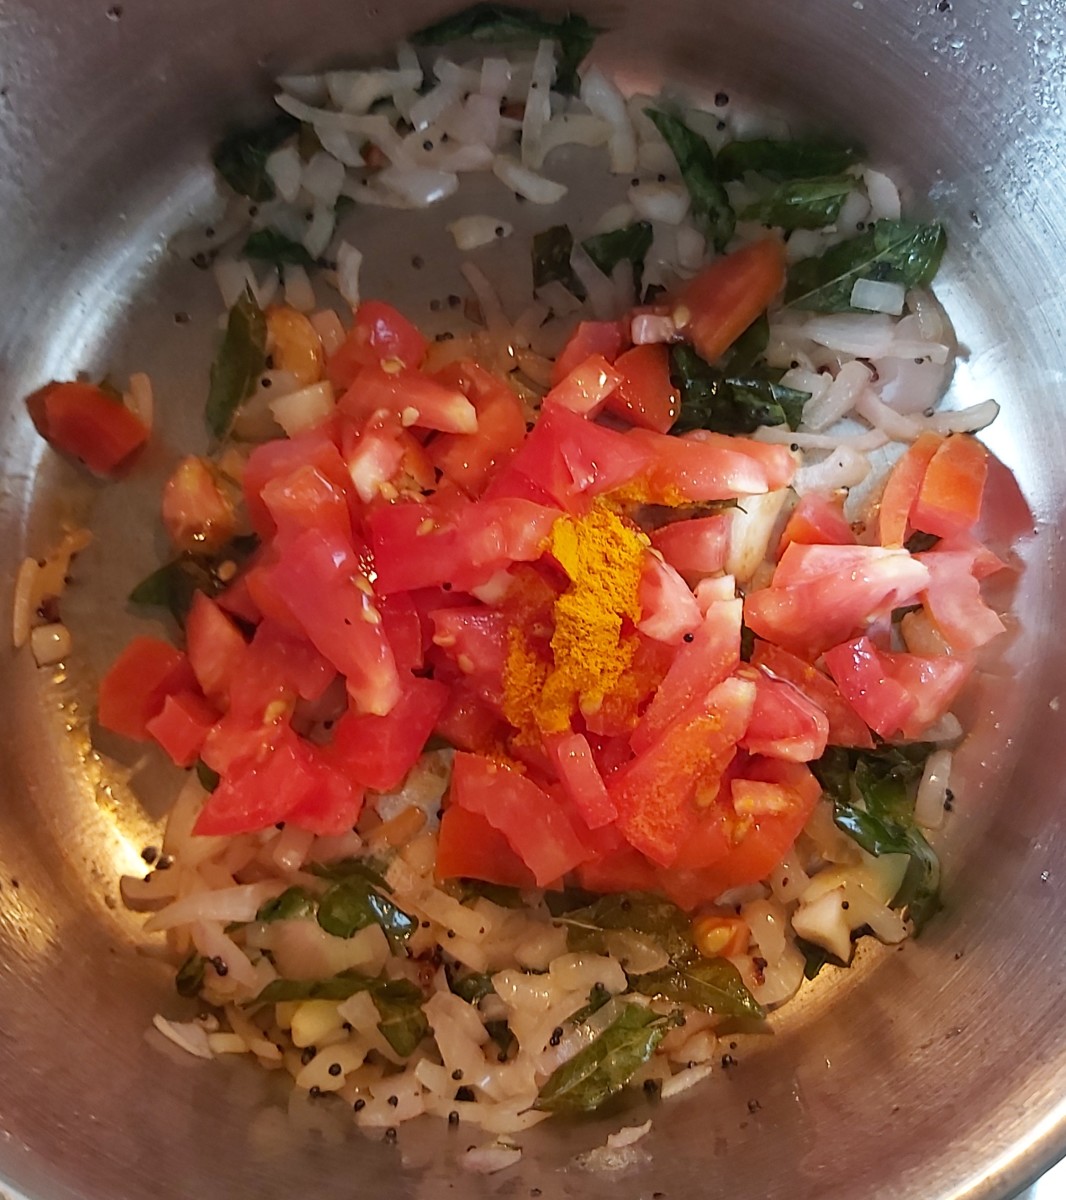 Add chopped tomatoes and 1/4 teaspoon of turmeric powder.